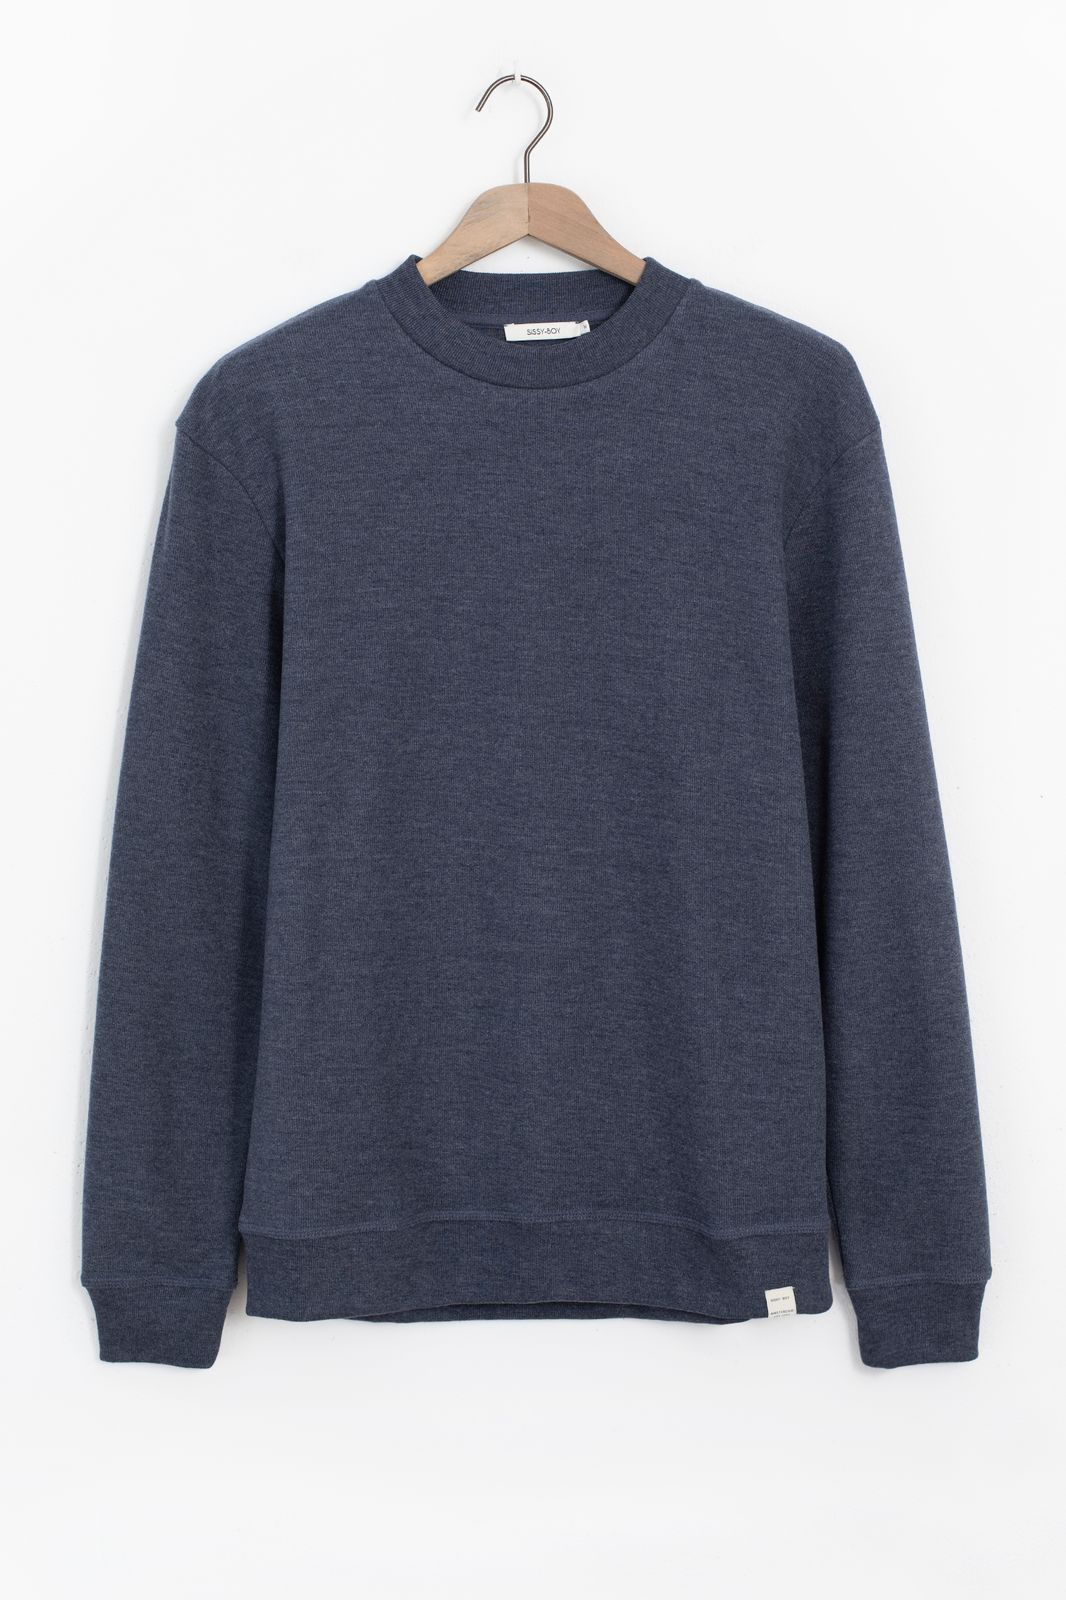 Baumwoll-Sweater - dunkelblau